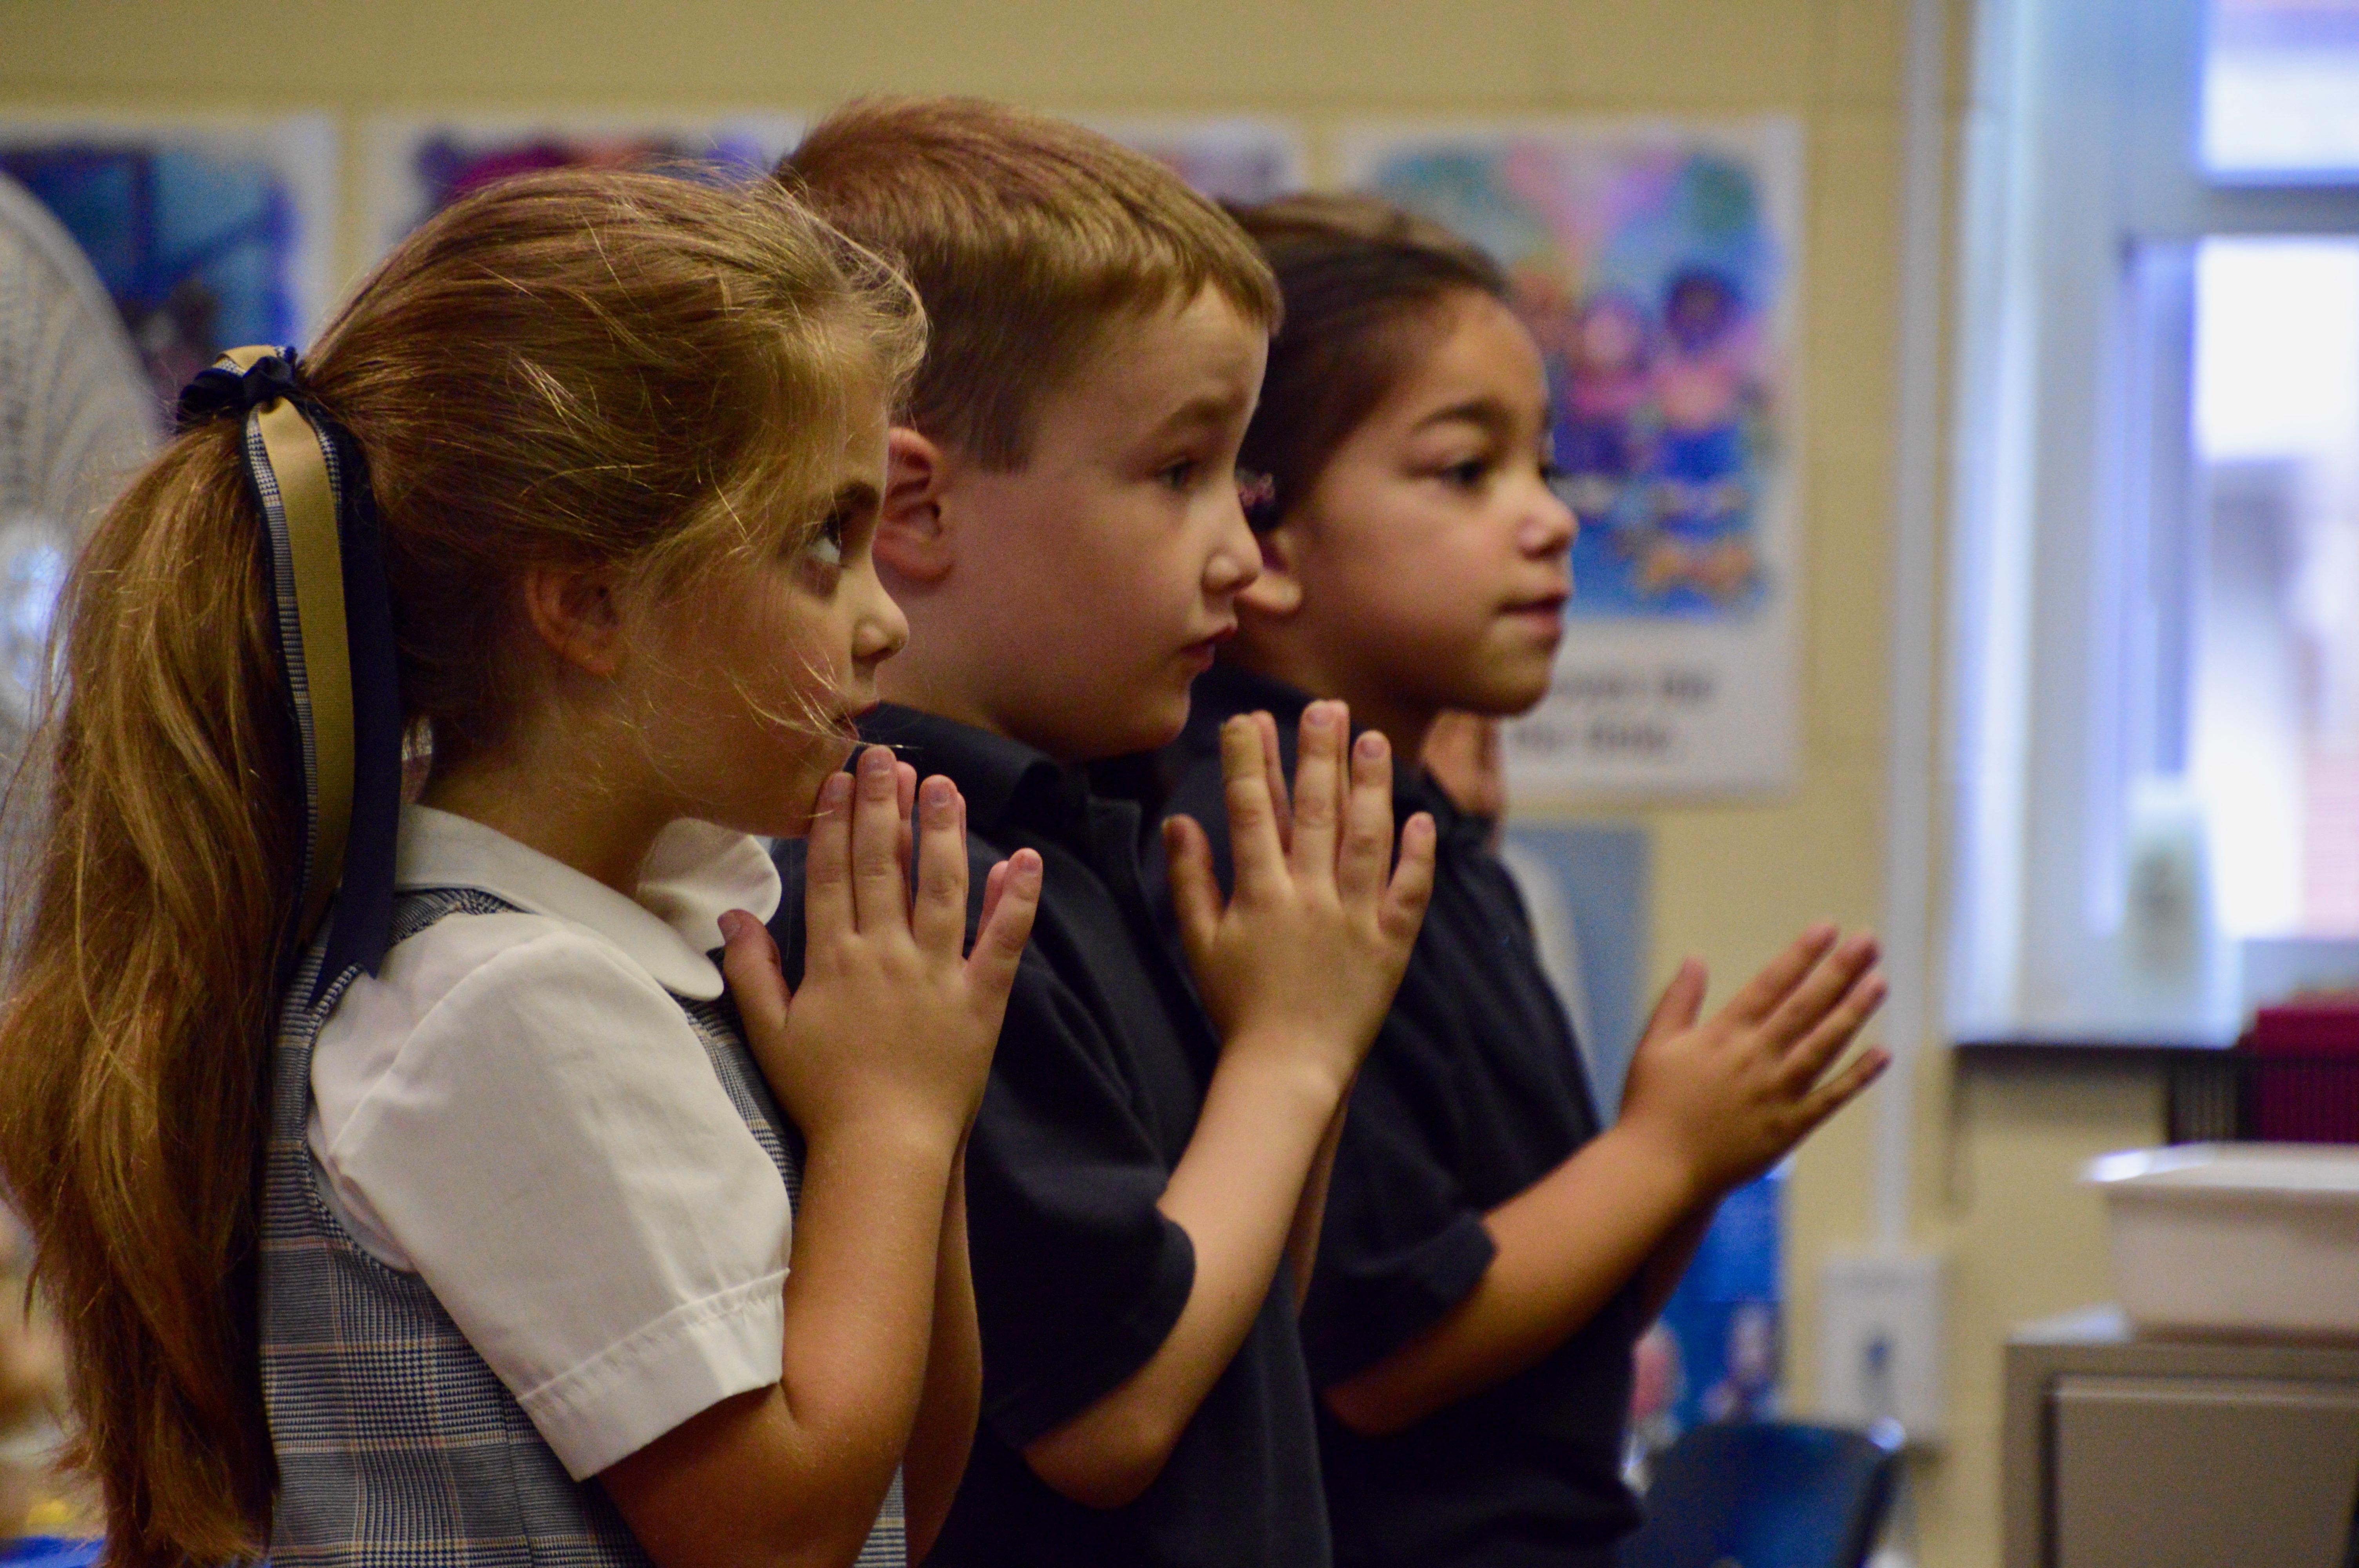 children praying